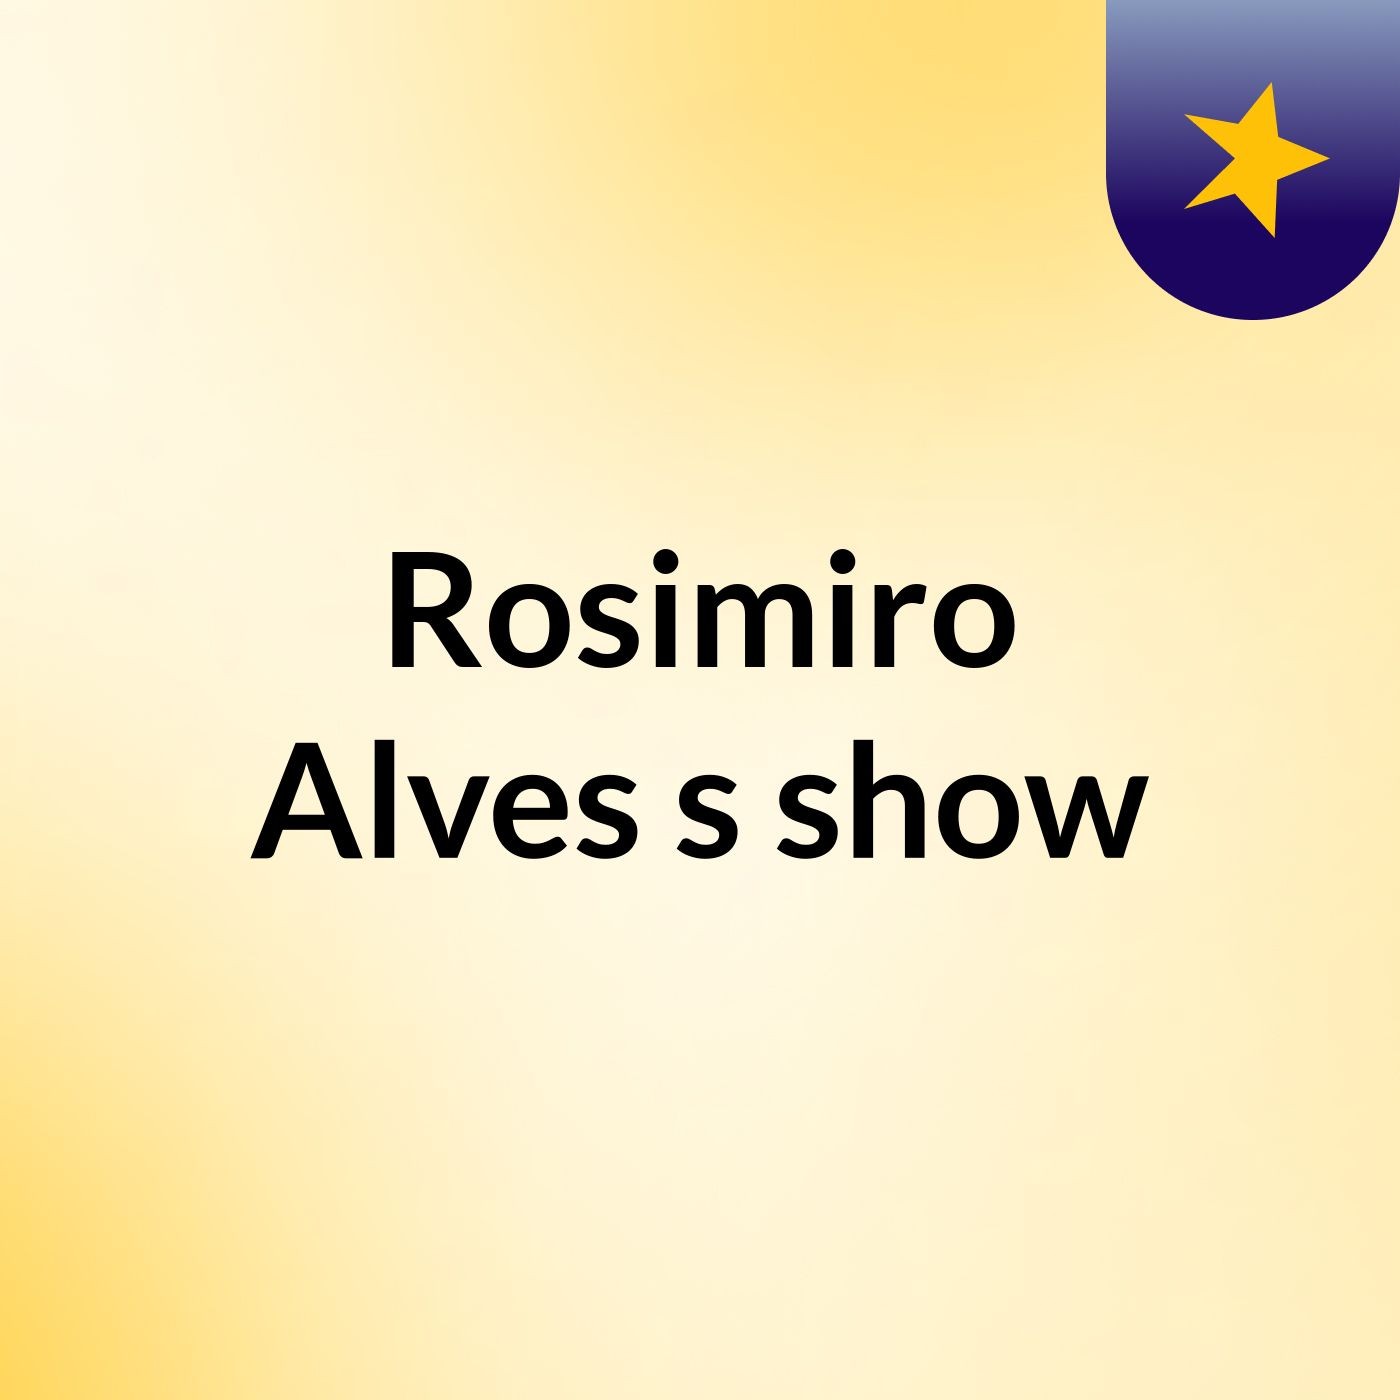 Rosimiro Alves's show